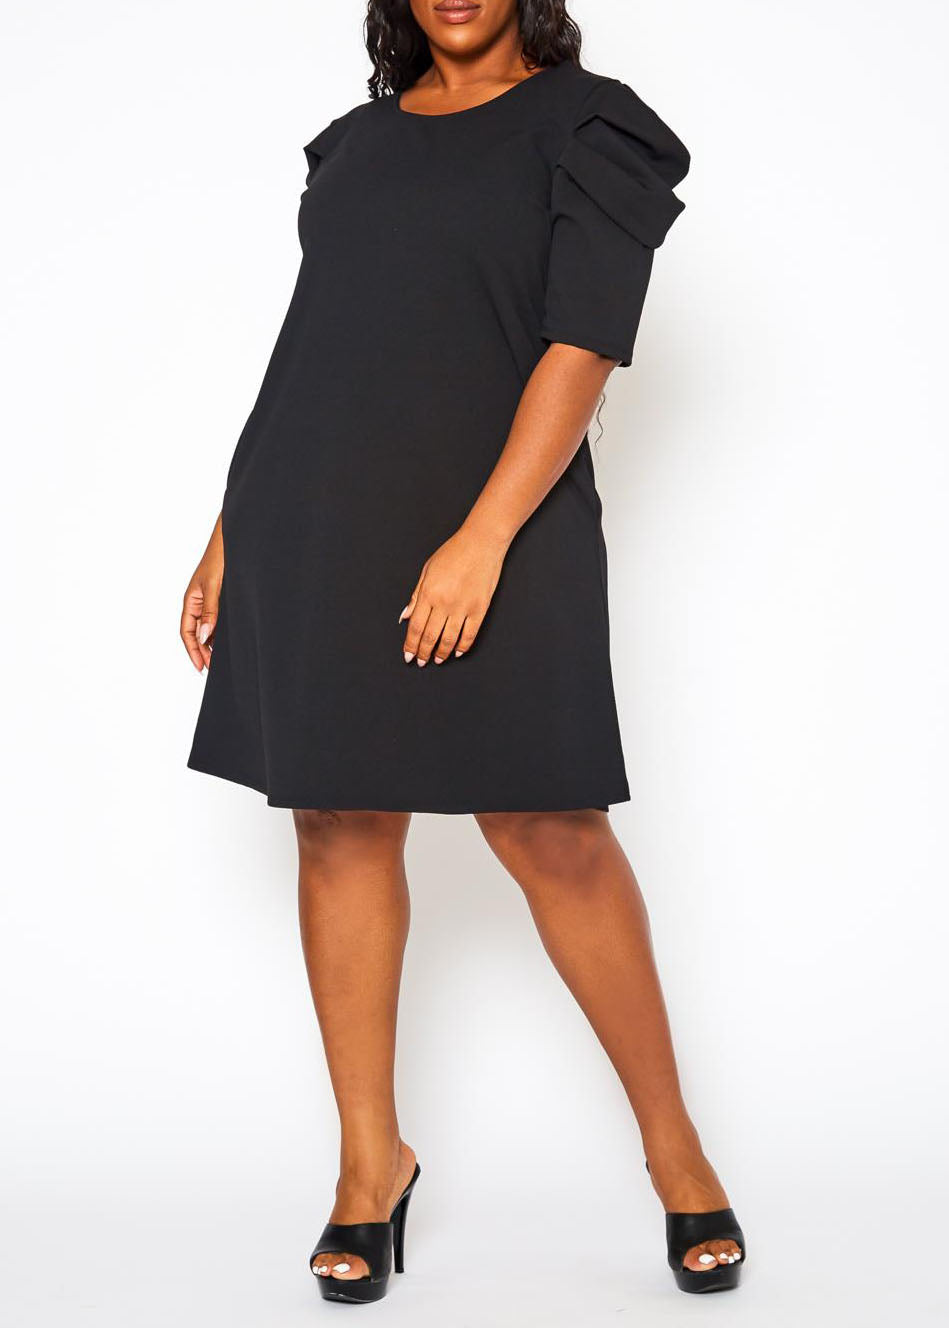 Hi Curvy Plus Size Women Ruffle Short Sleeve Bodycon Dress Made in USA